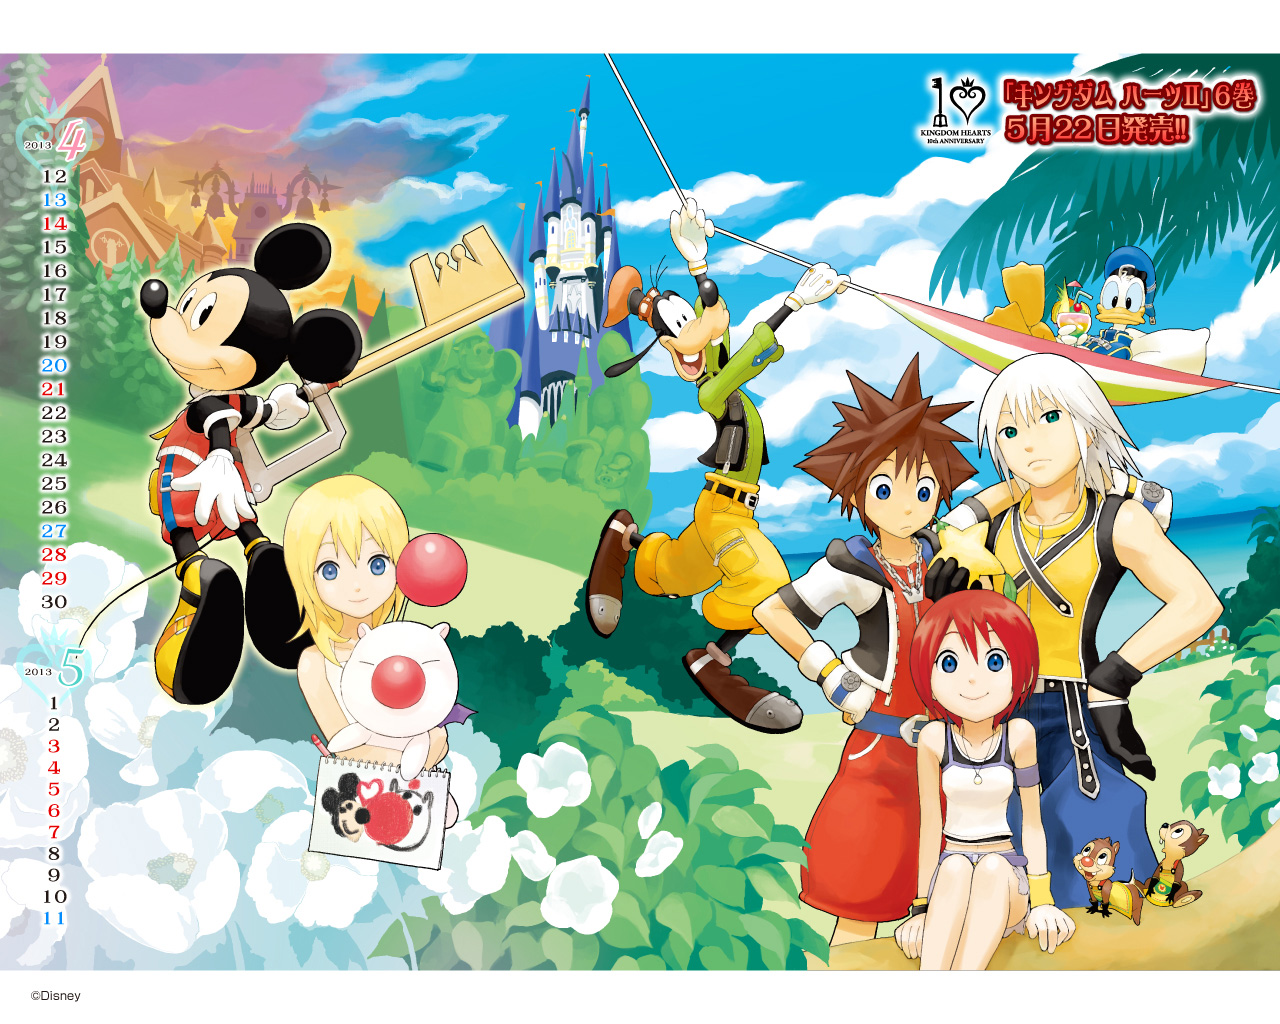 KINGDOM HEARTS 10th Anniversary Wallpaper 9! News Kingdom Hearts